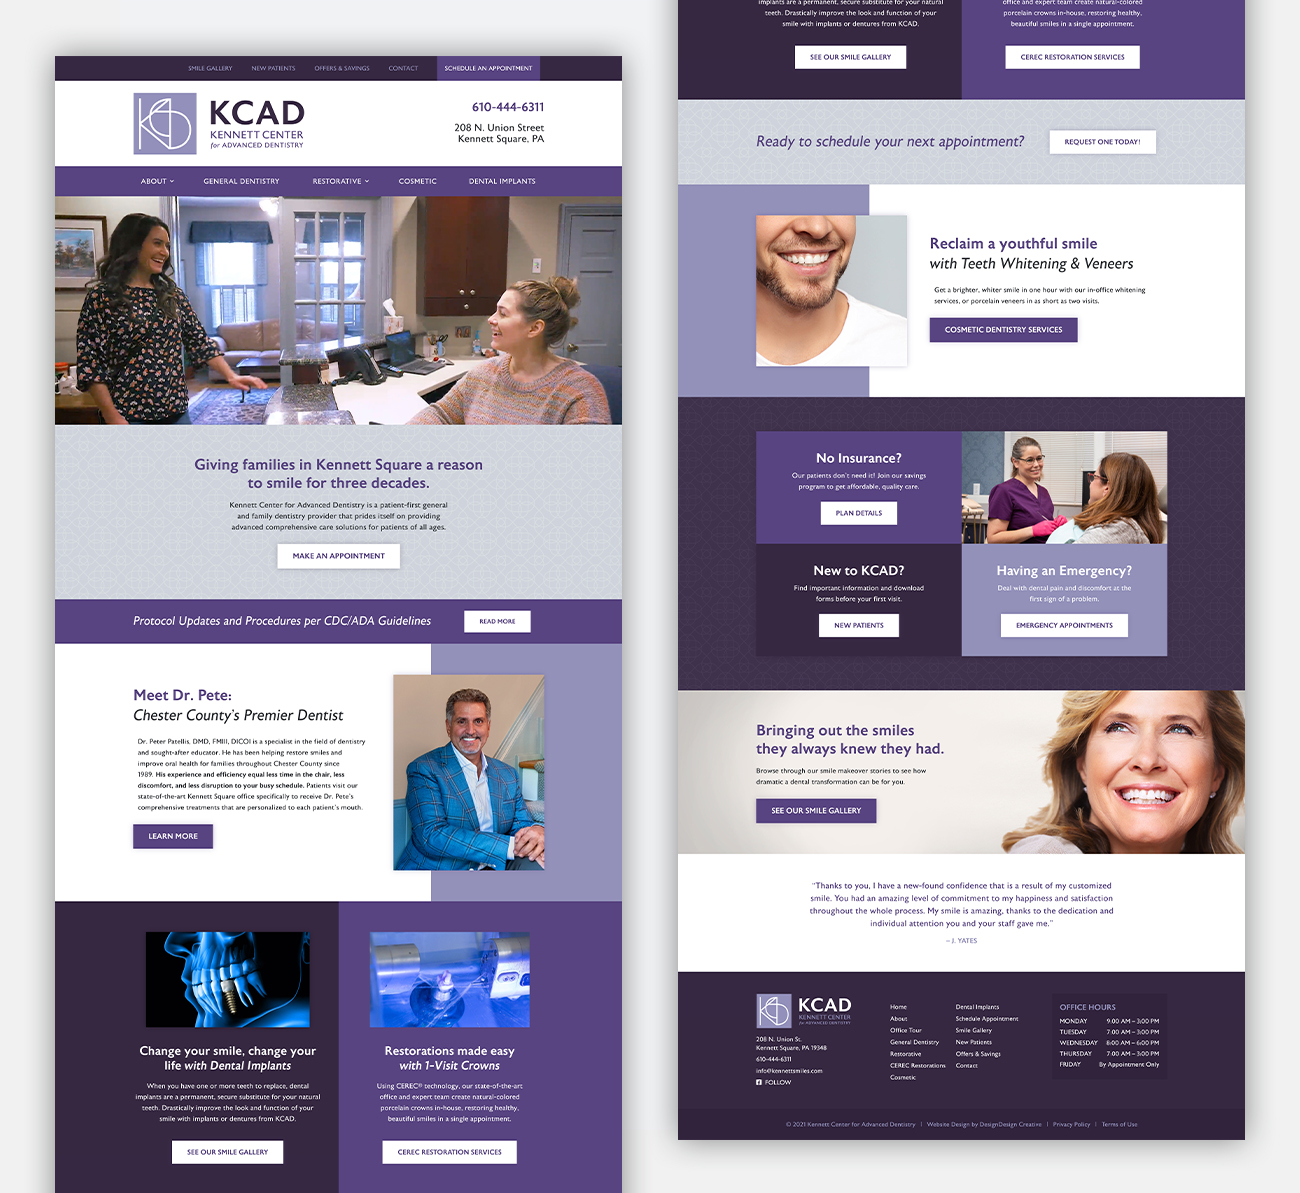 KCAD Website Homepage Design